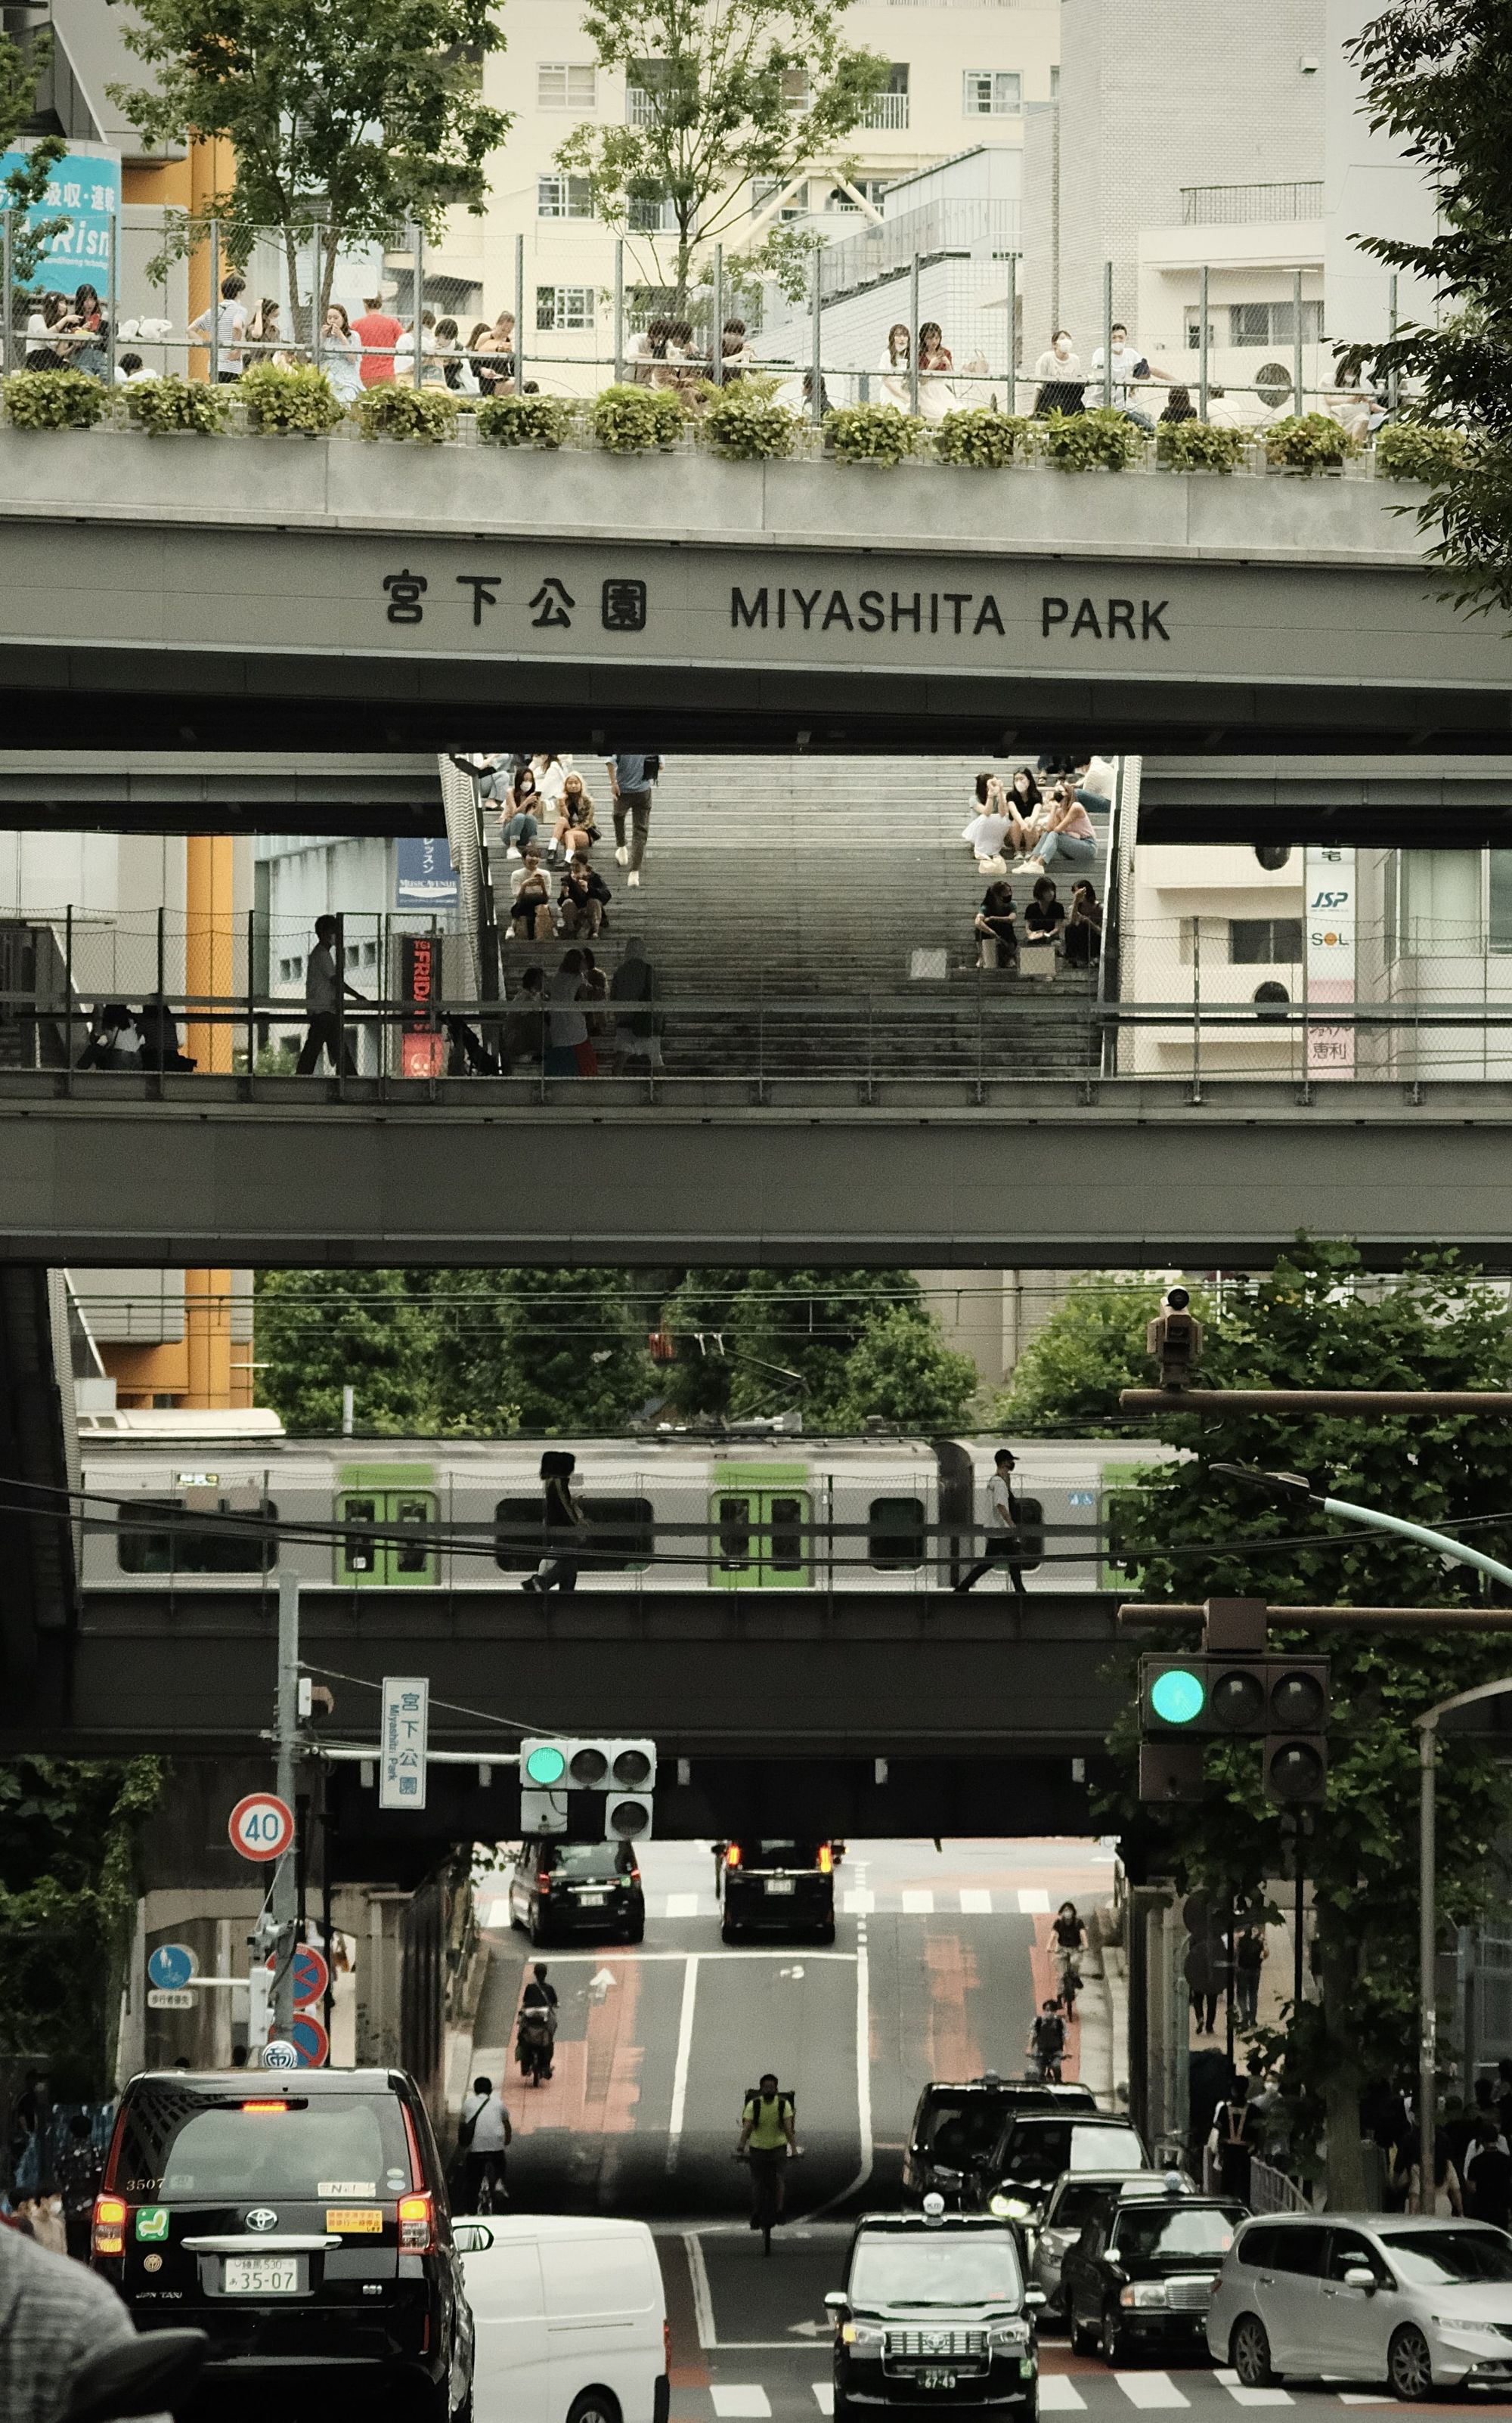 miyashita park, Shibuya, tokyo